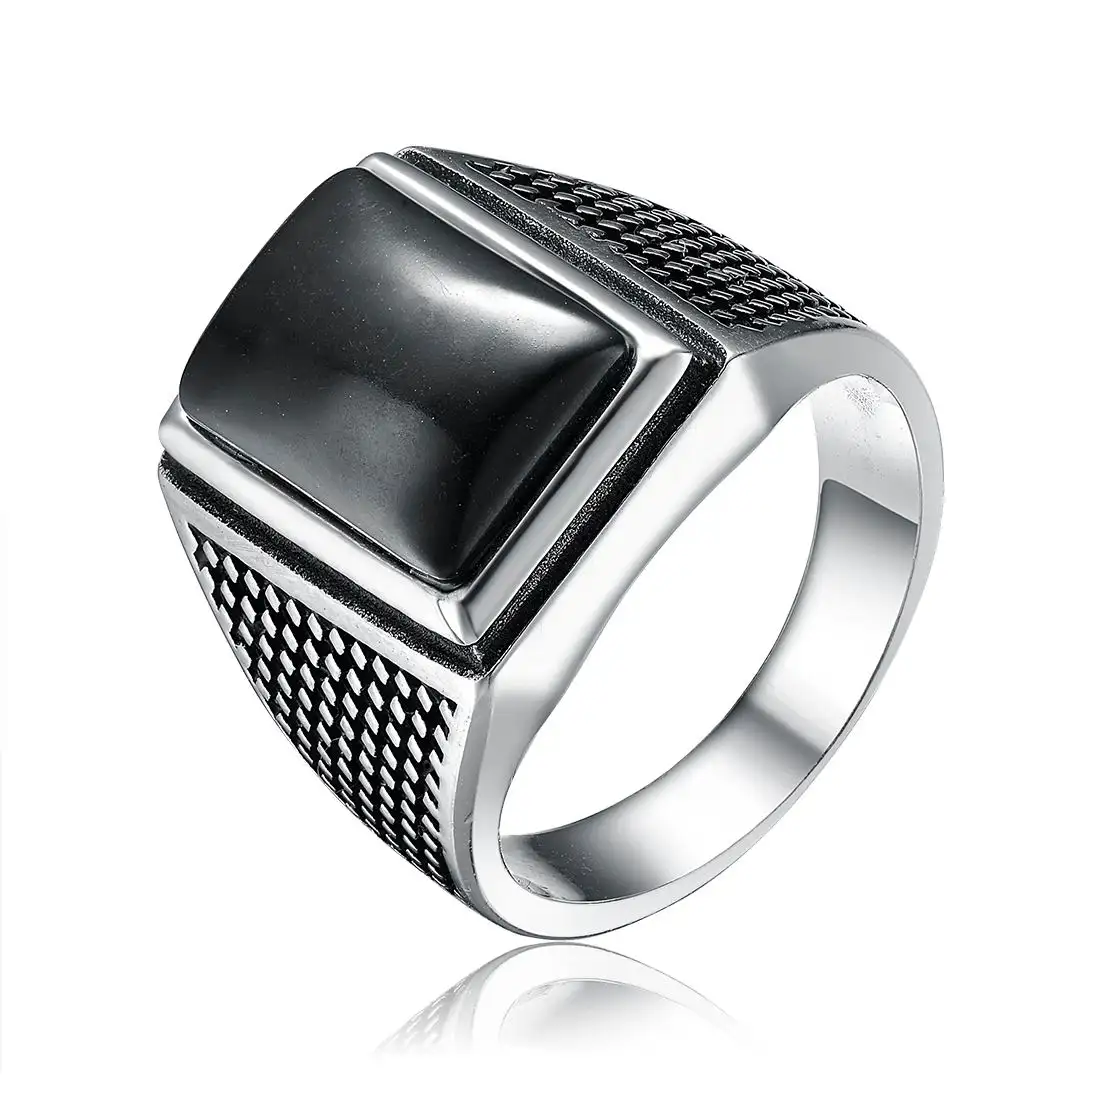 RN6615 New Top Sale Dubai Design Antik Silber Authentic Islamic Ring billig hand gefertigten quadratischen Ring